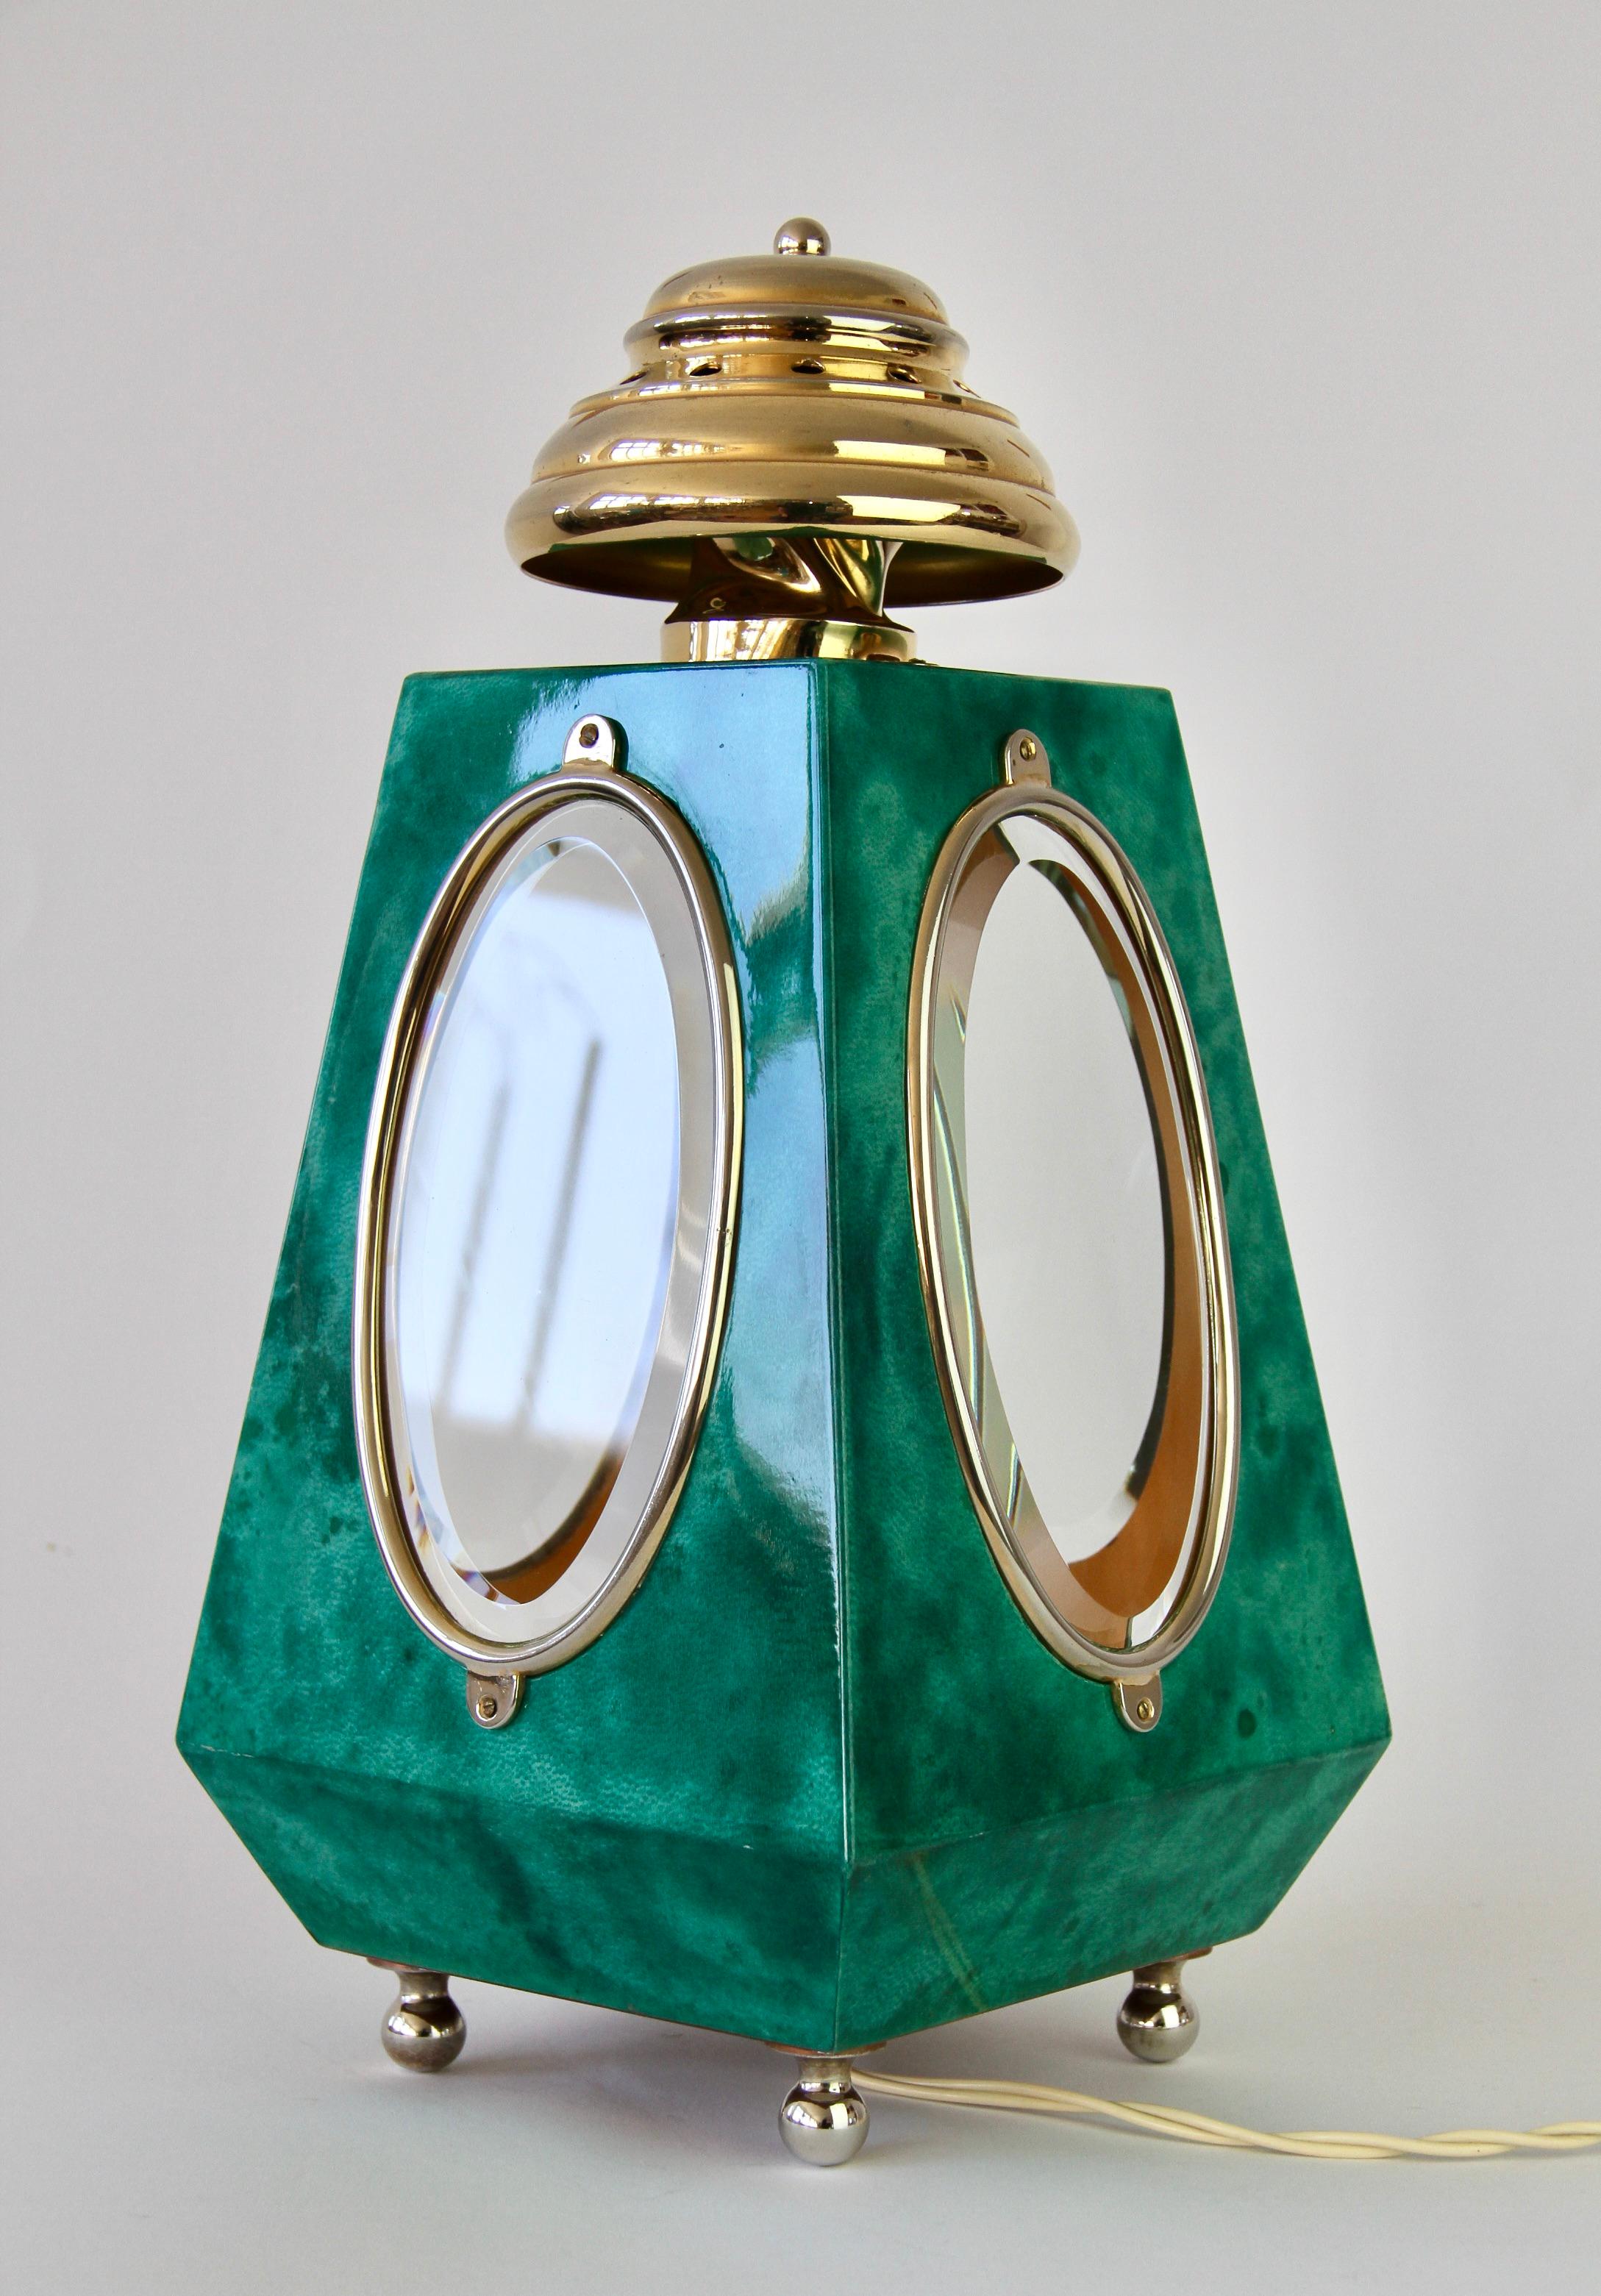 Aldo Tura 1960s Midcentury Table Lamp / Lantern in Green Italian Goatskin 8